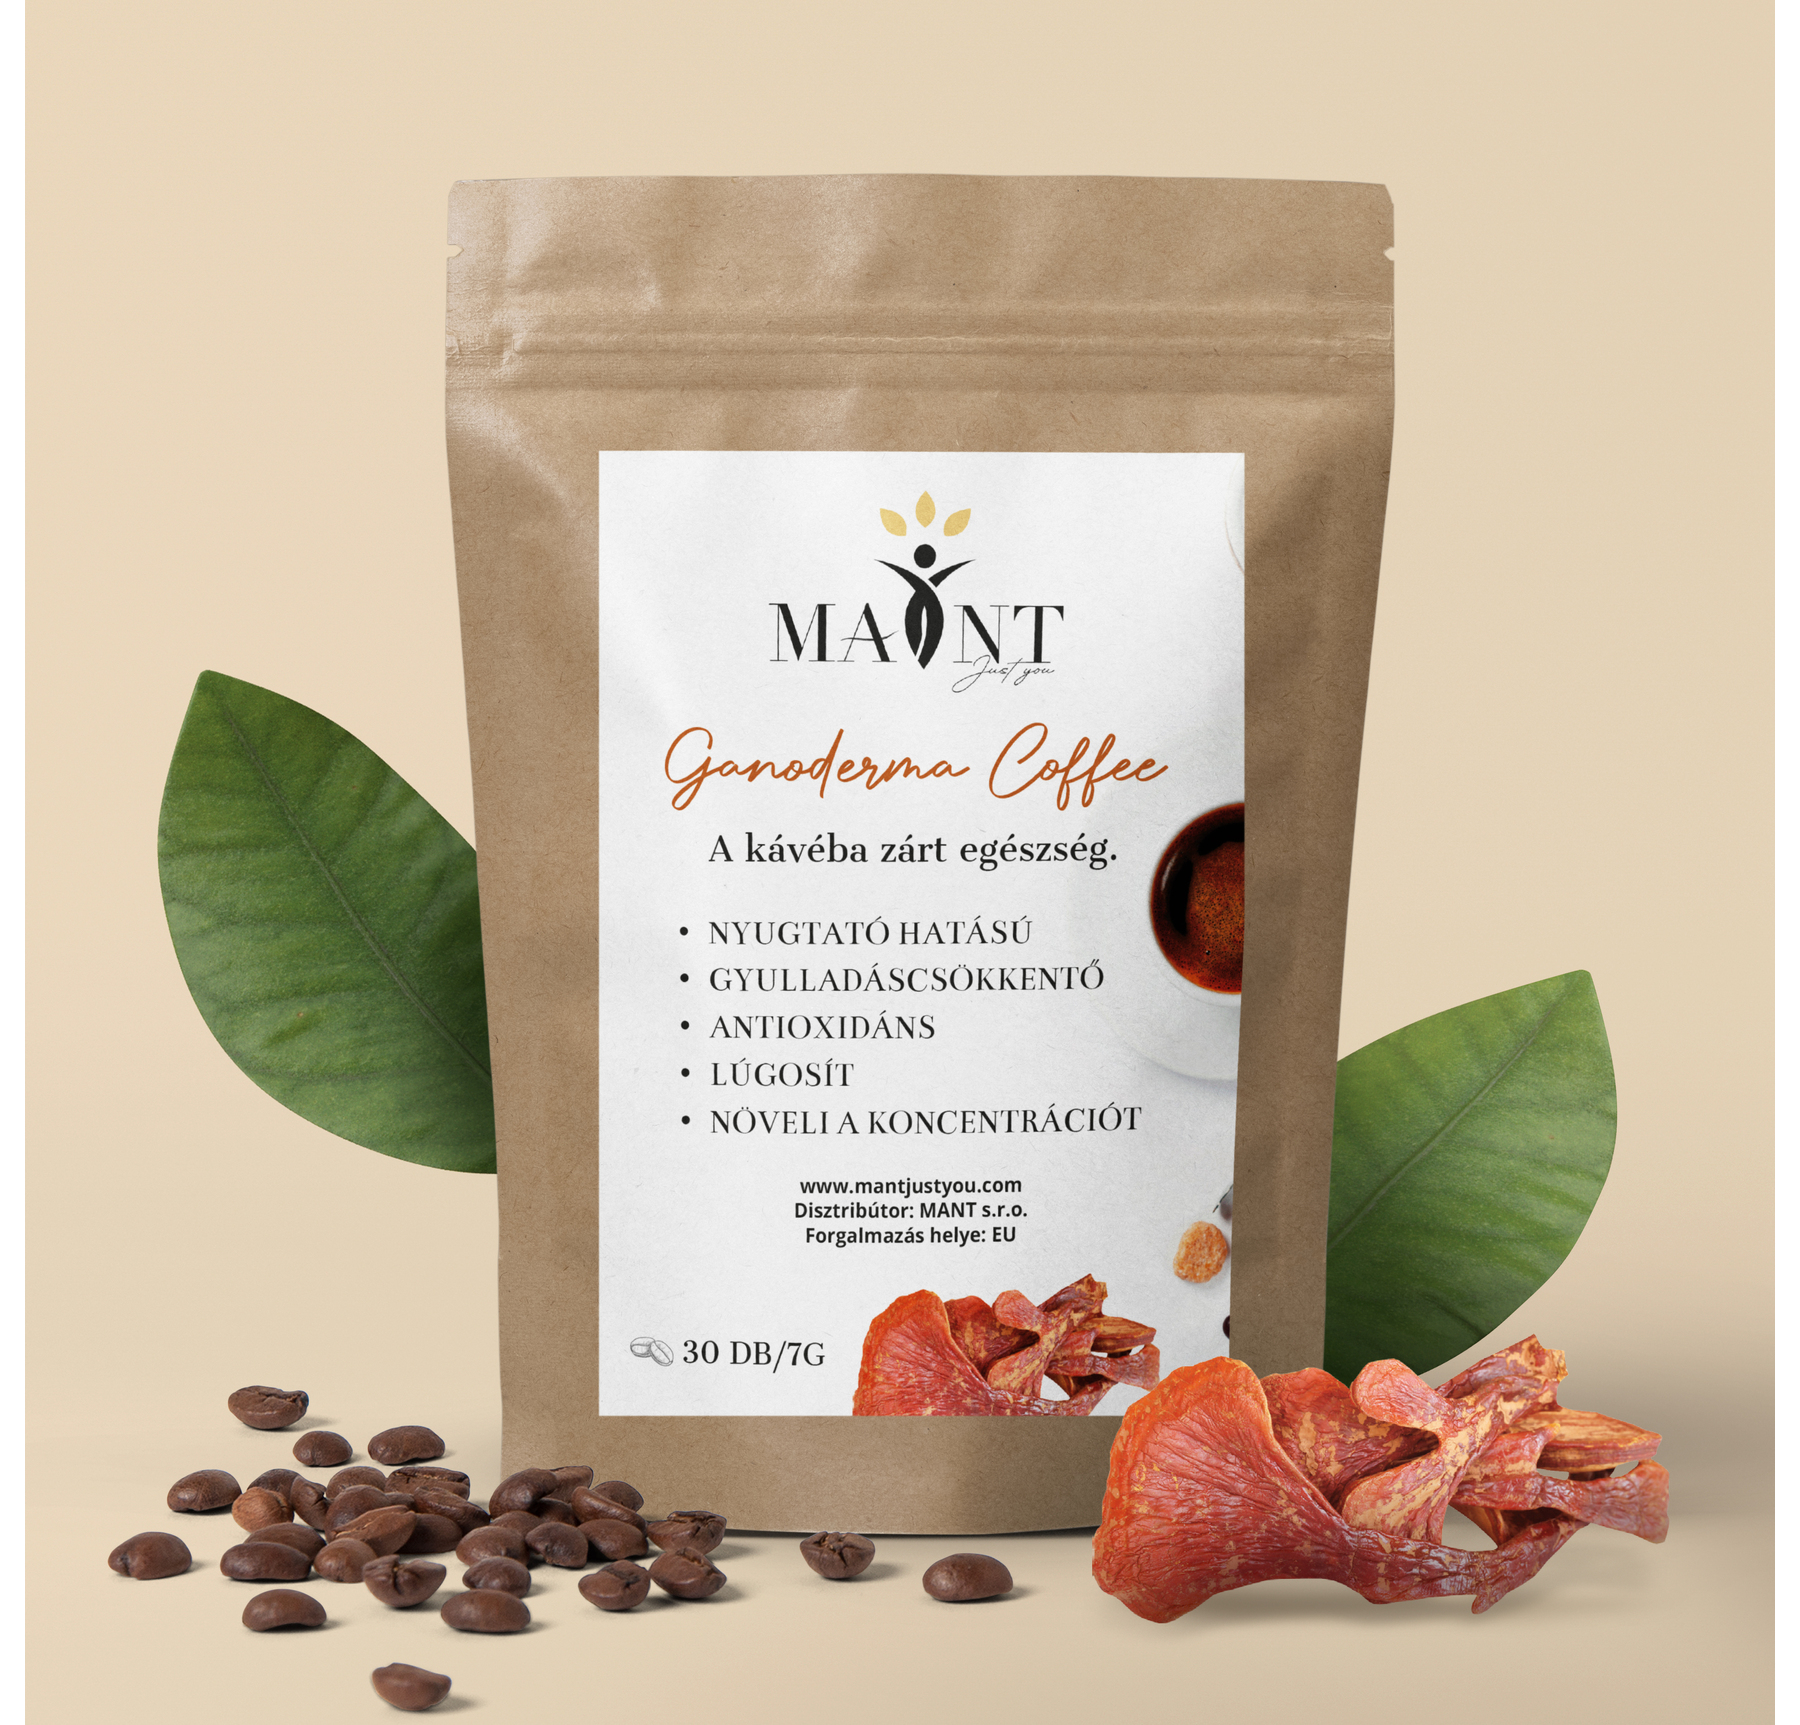 MANT Ganoderma Coffee - Zdraví skryté v kávě